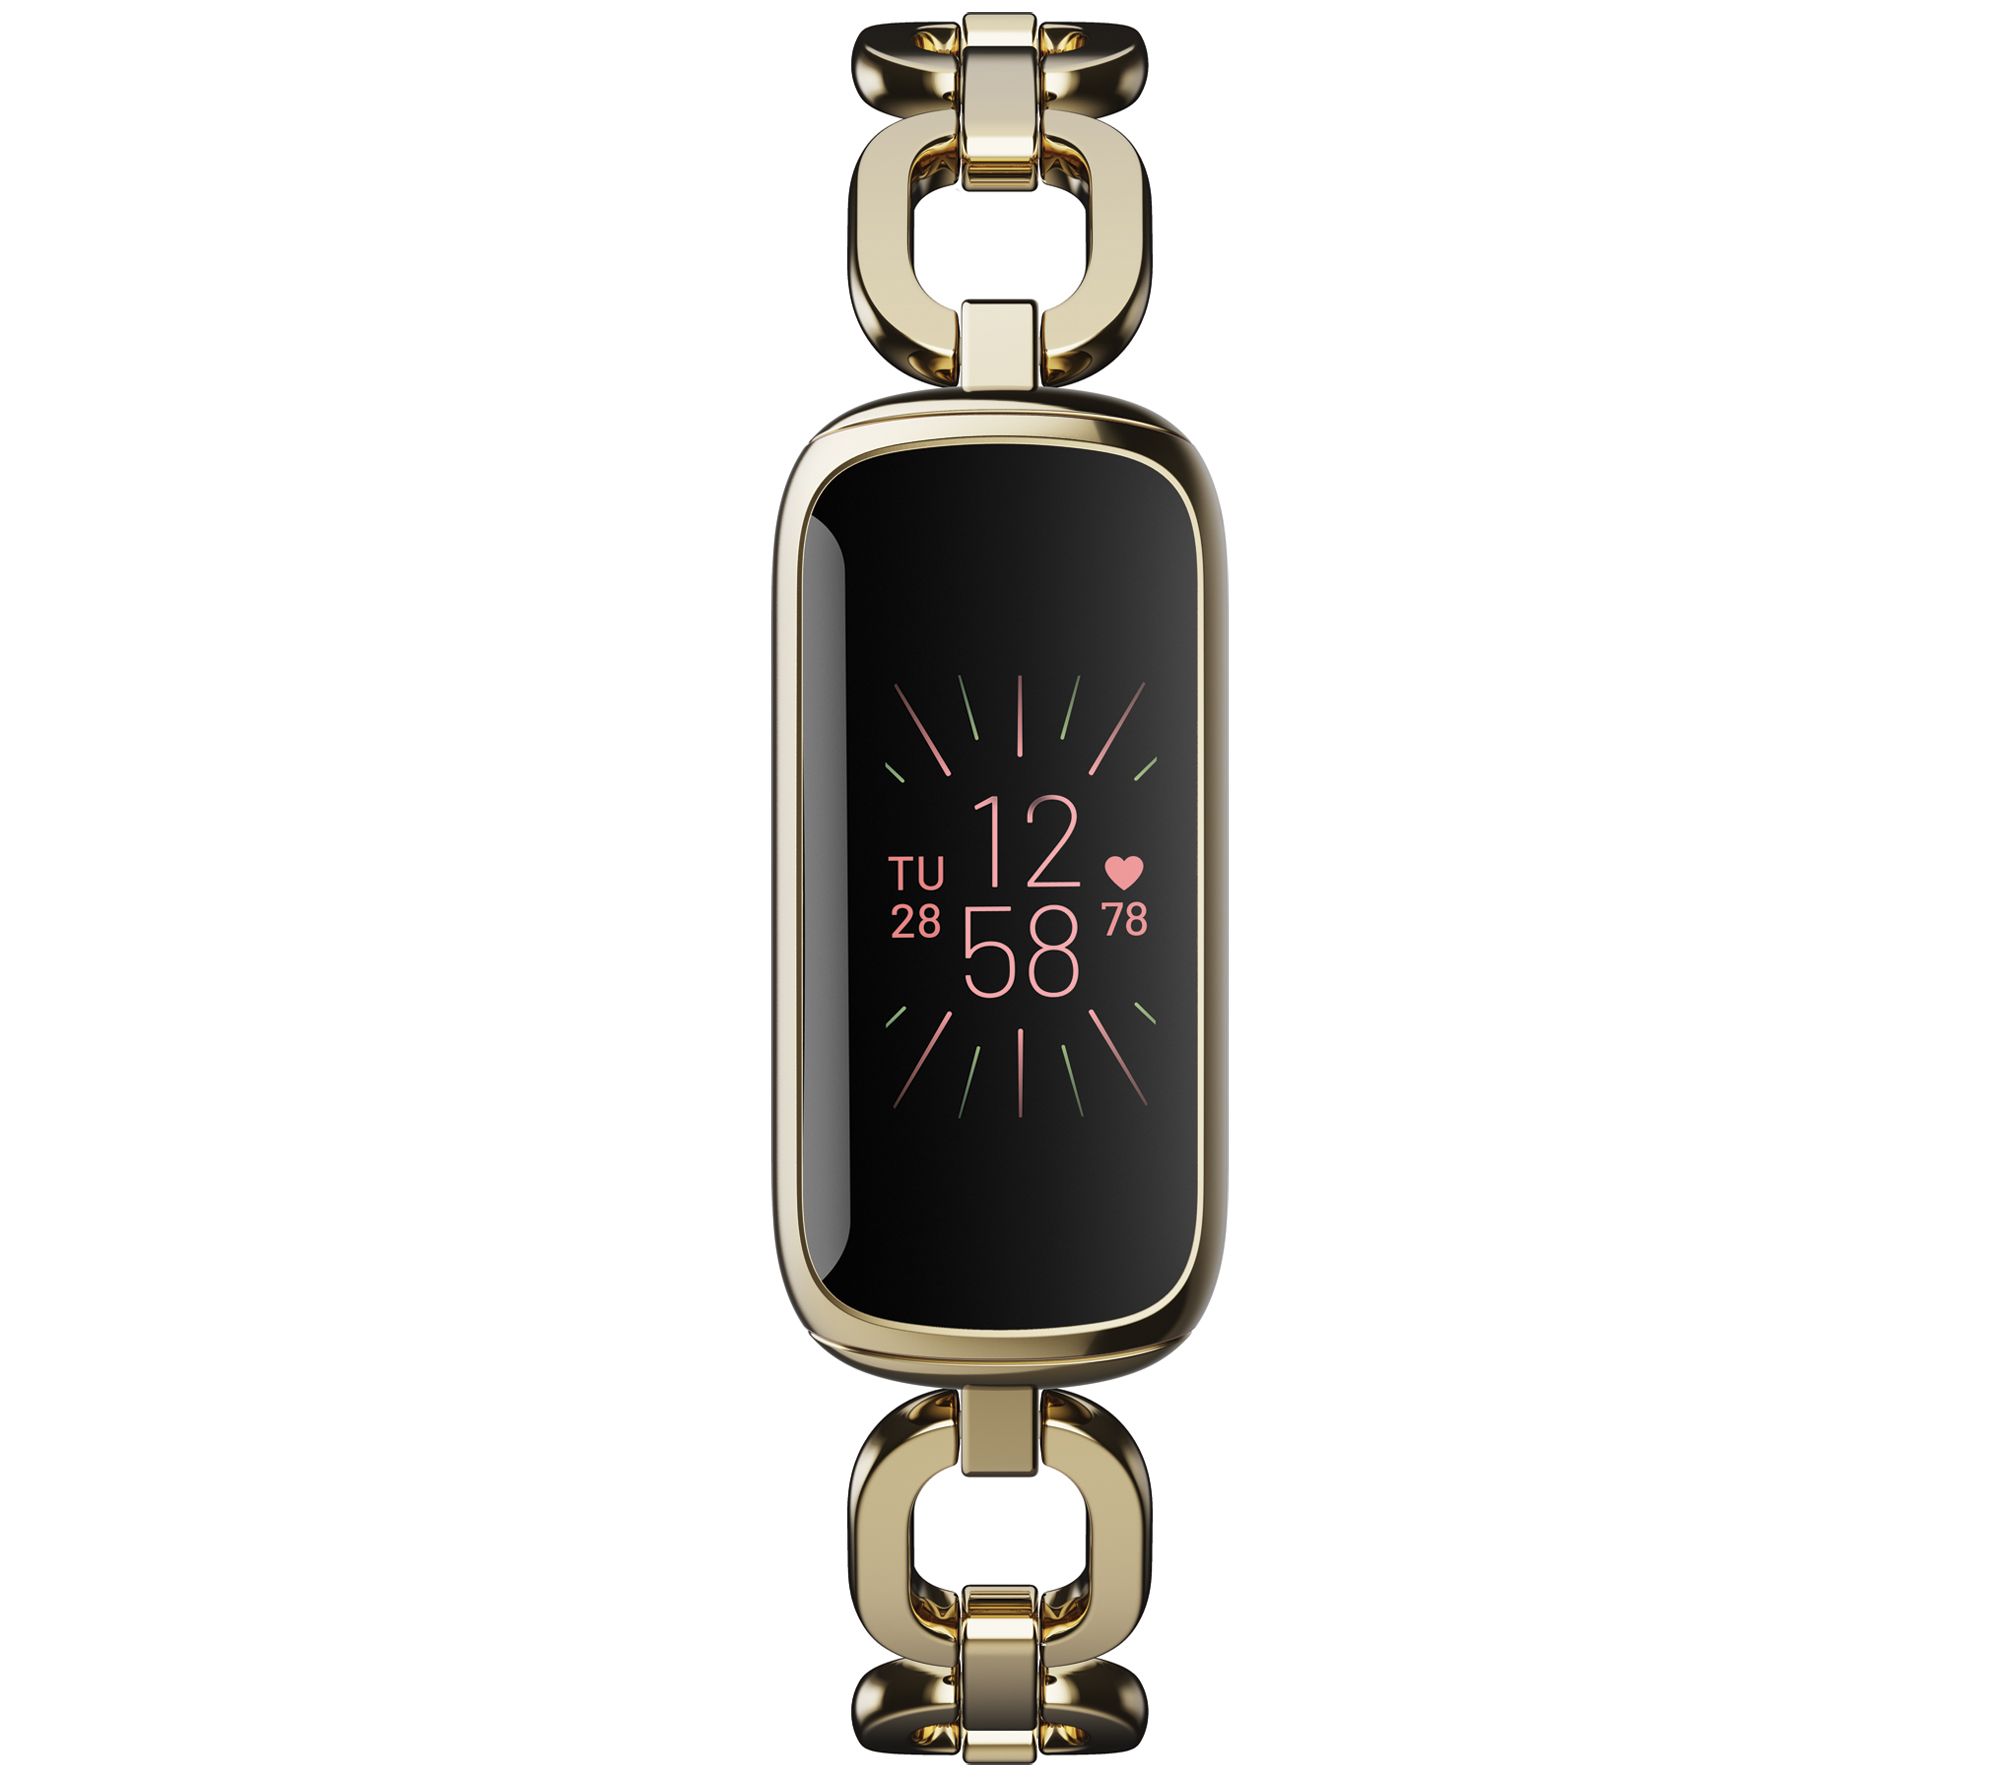 Fitbit Luxe - Gorjana Special Edition - acier inoxydable en or